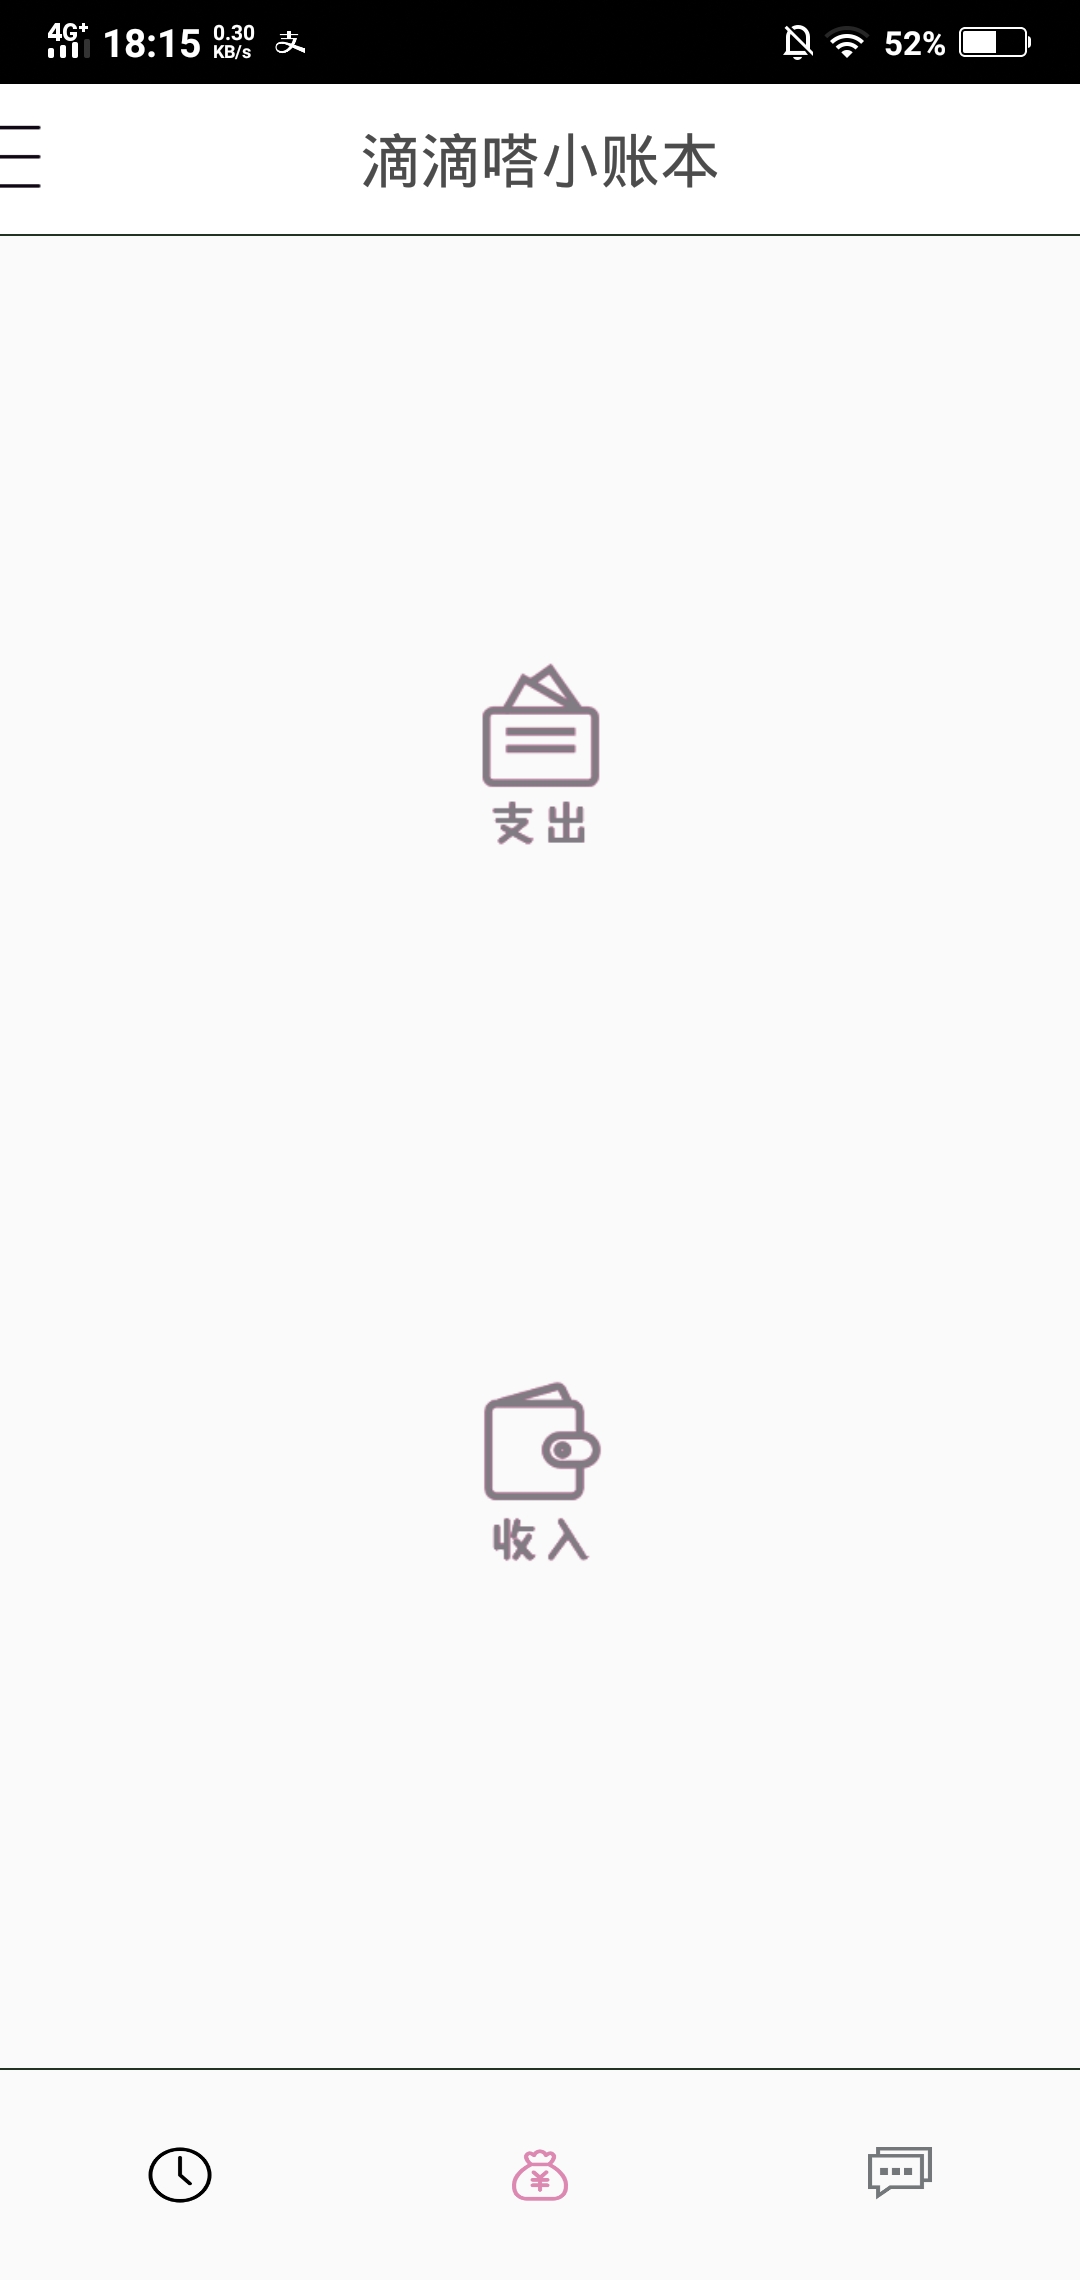 Android 小账本小结 Xiaogao128 博客园